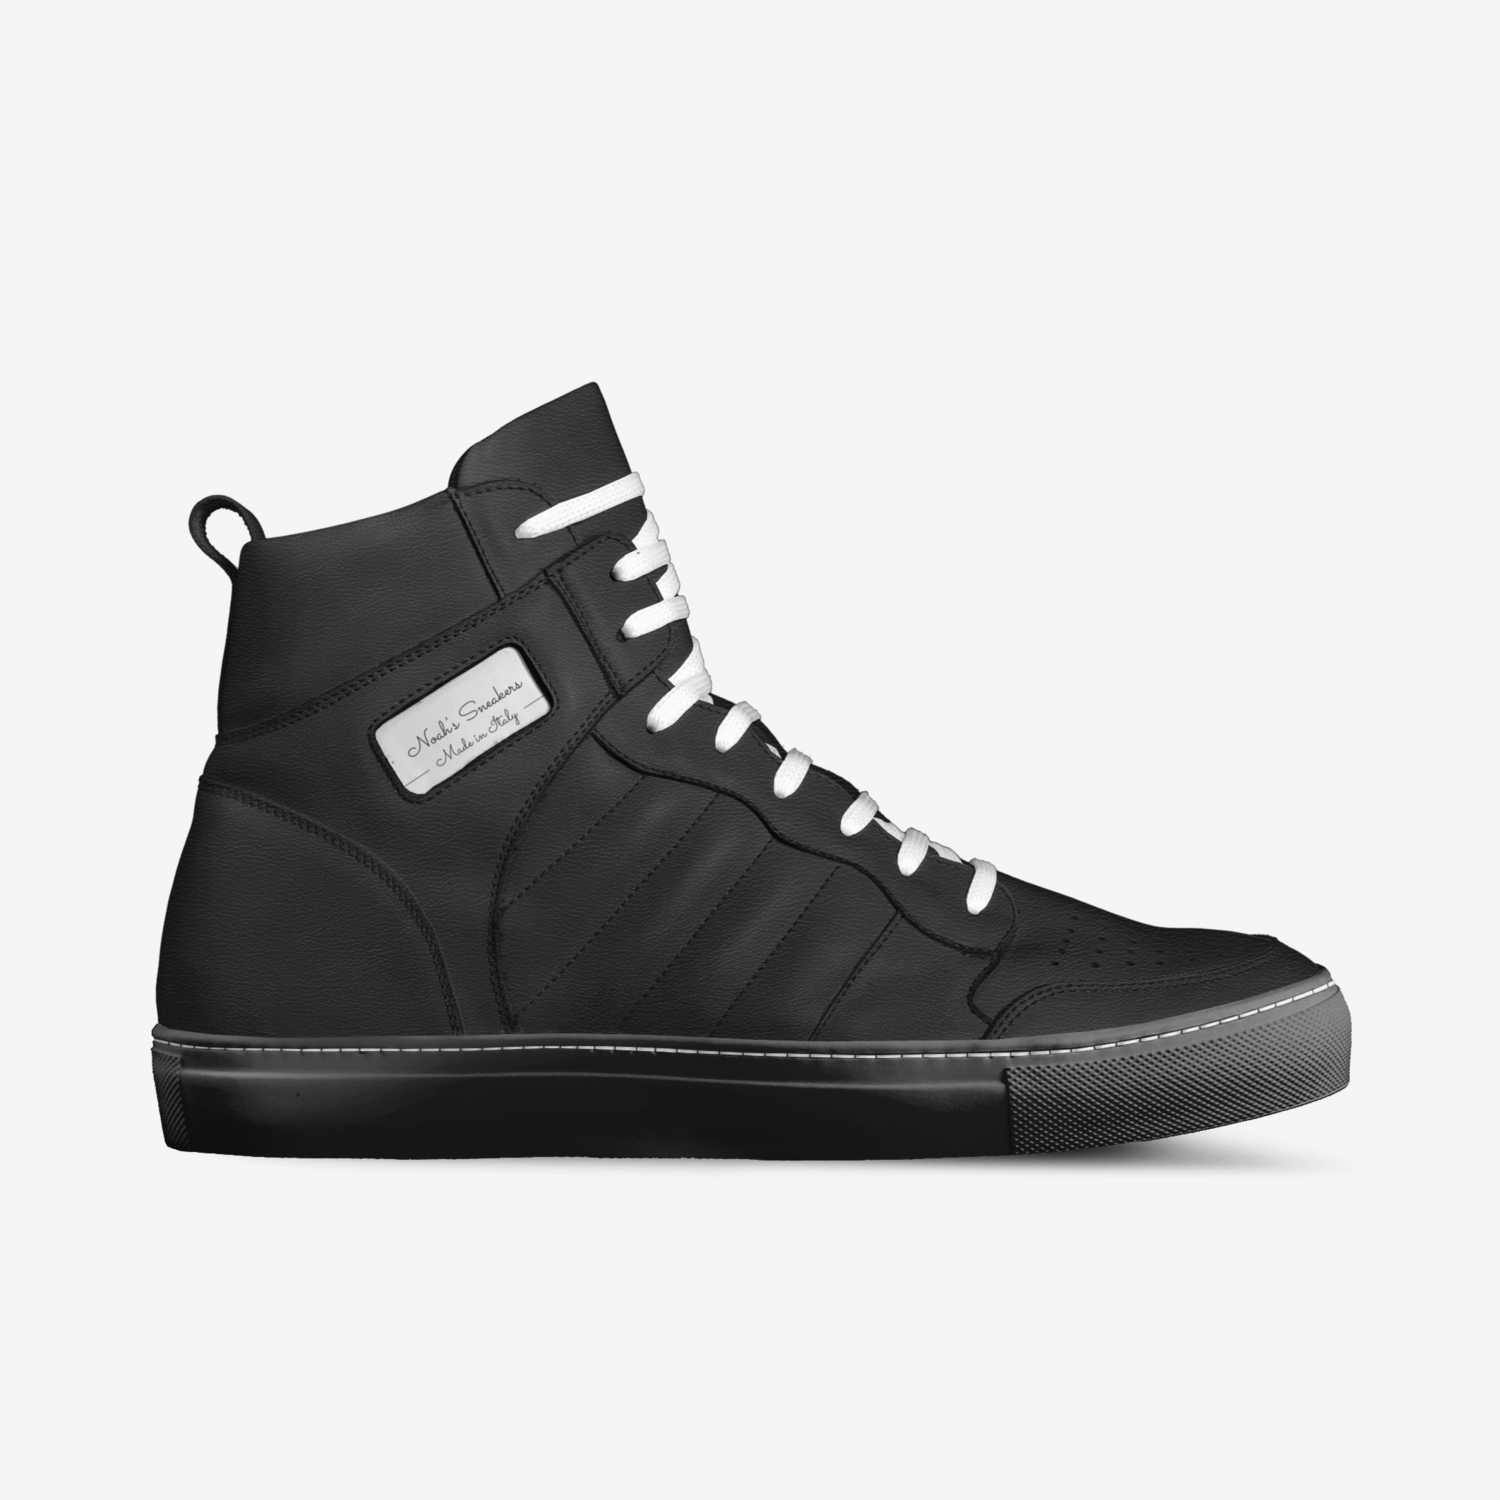 Noah's Sneakers | A Custom Shoe concept by Noah Dennis